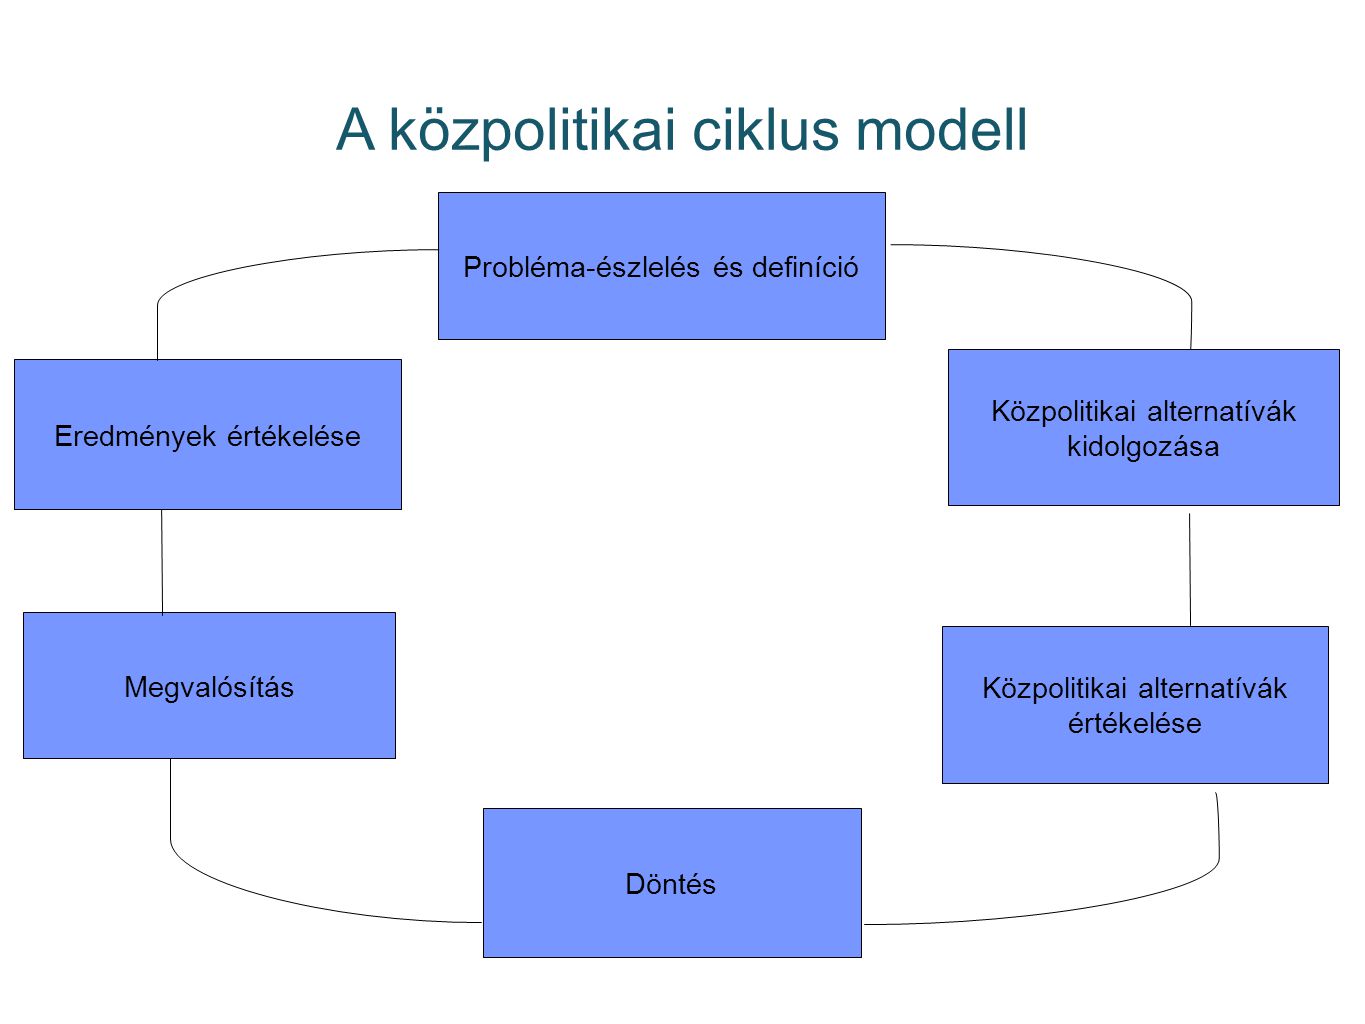 A közpolitikai ciklus modell